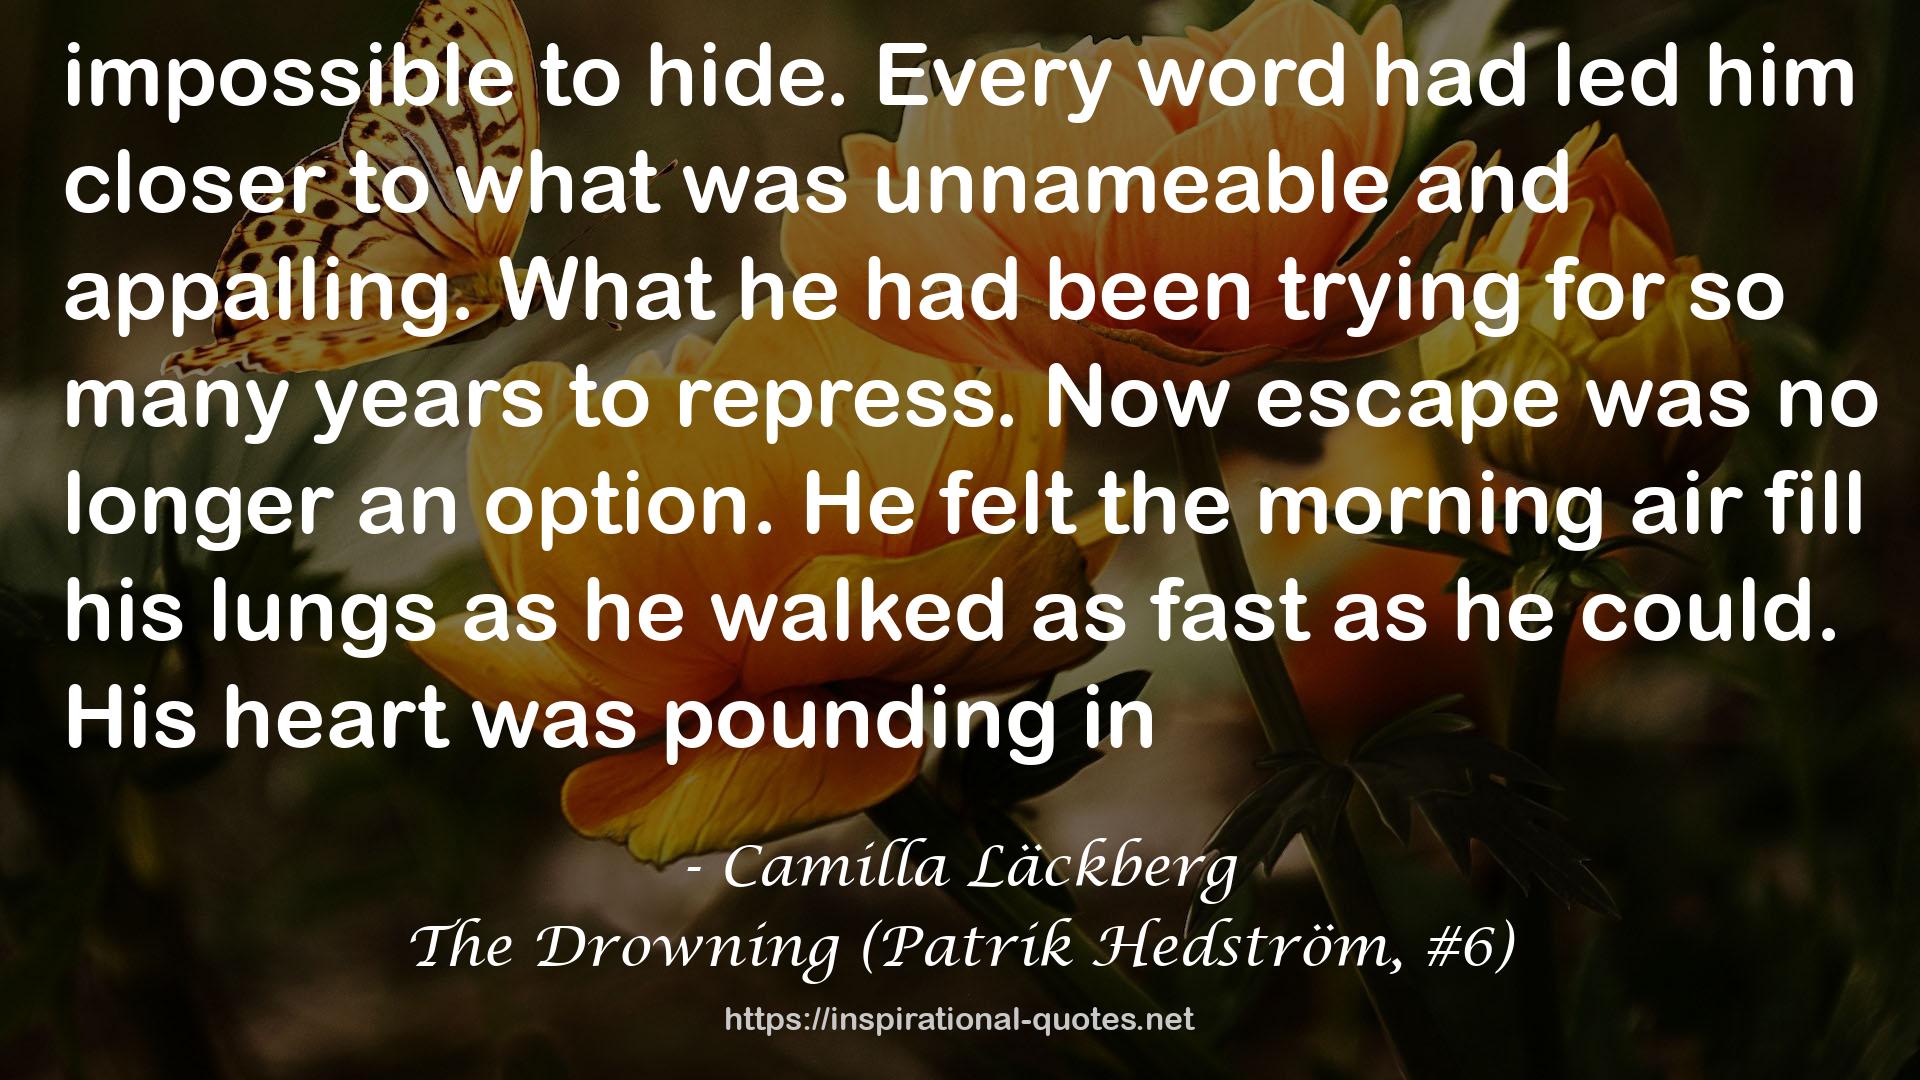 The Drowning (Patrik Hedström, #6) QUOTES